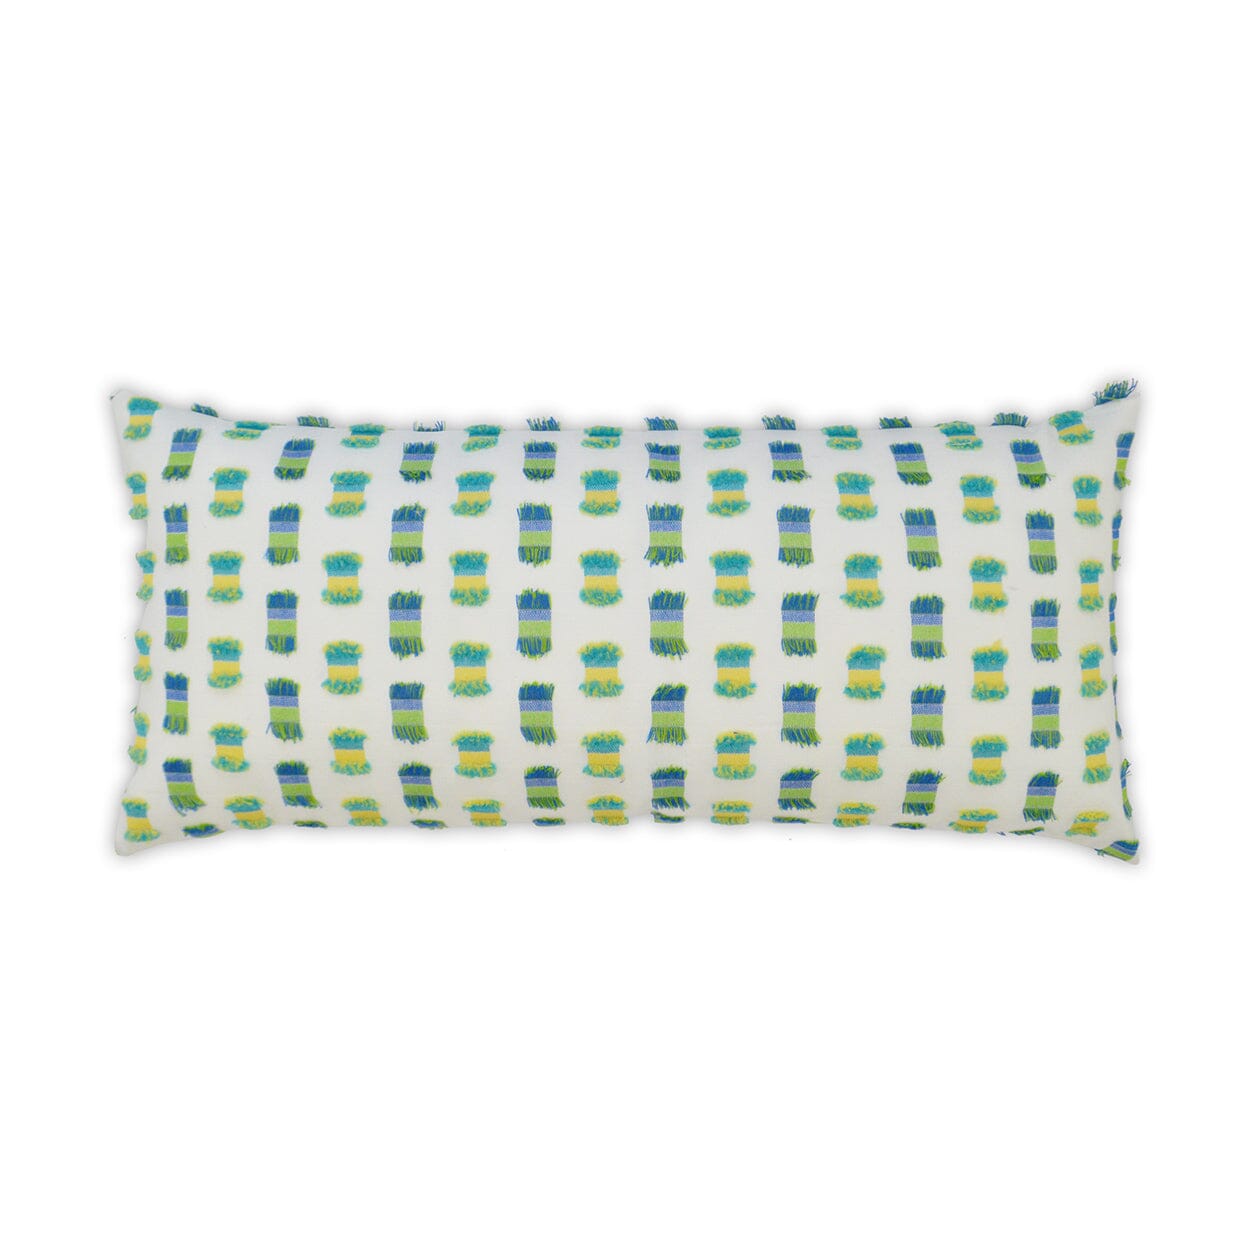 D.V. Kap 12" x 24" Outdoor Lumbar Pillow | Fifi Green Pillows D.V Kap Outdoor